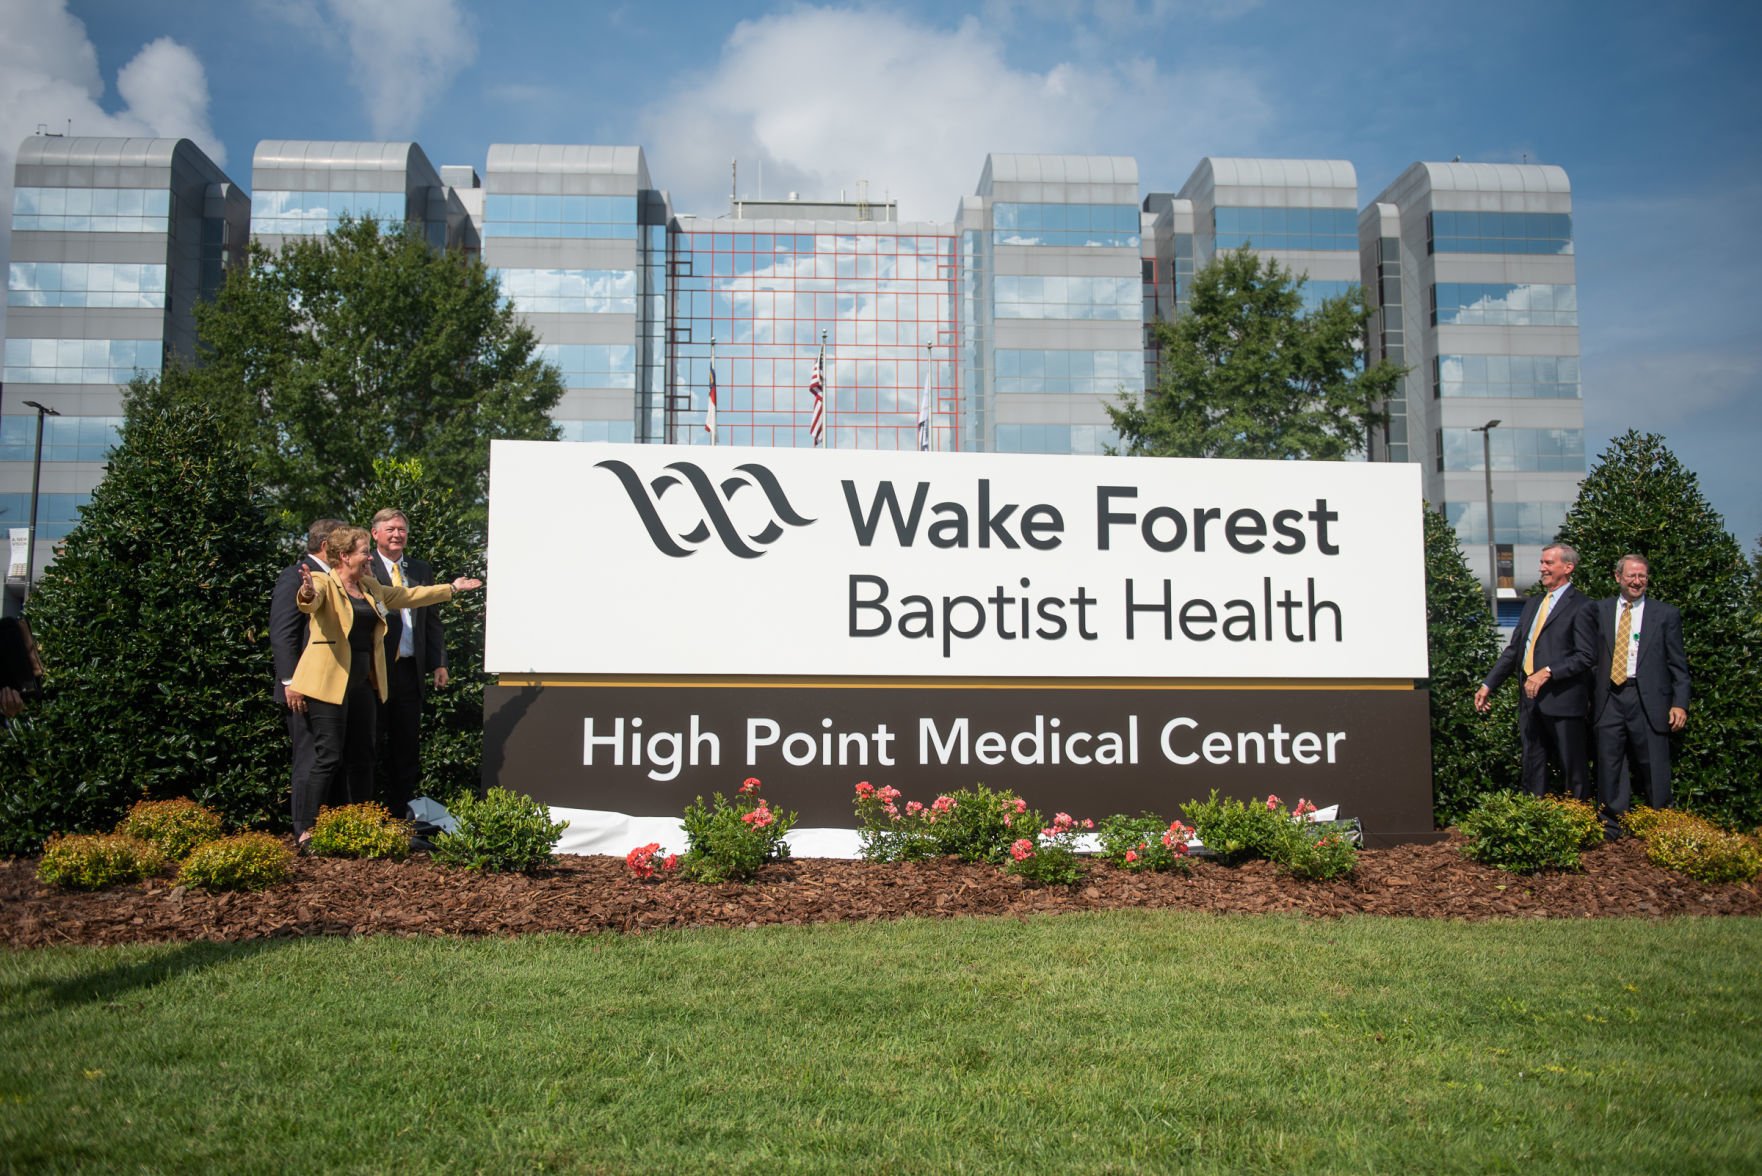 wake forest baptist medical center